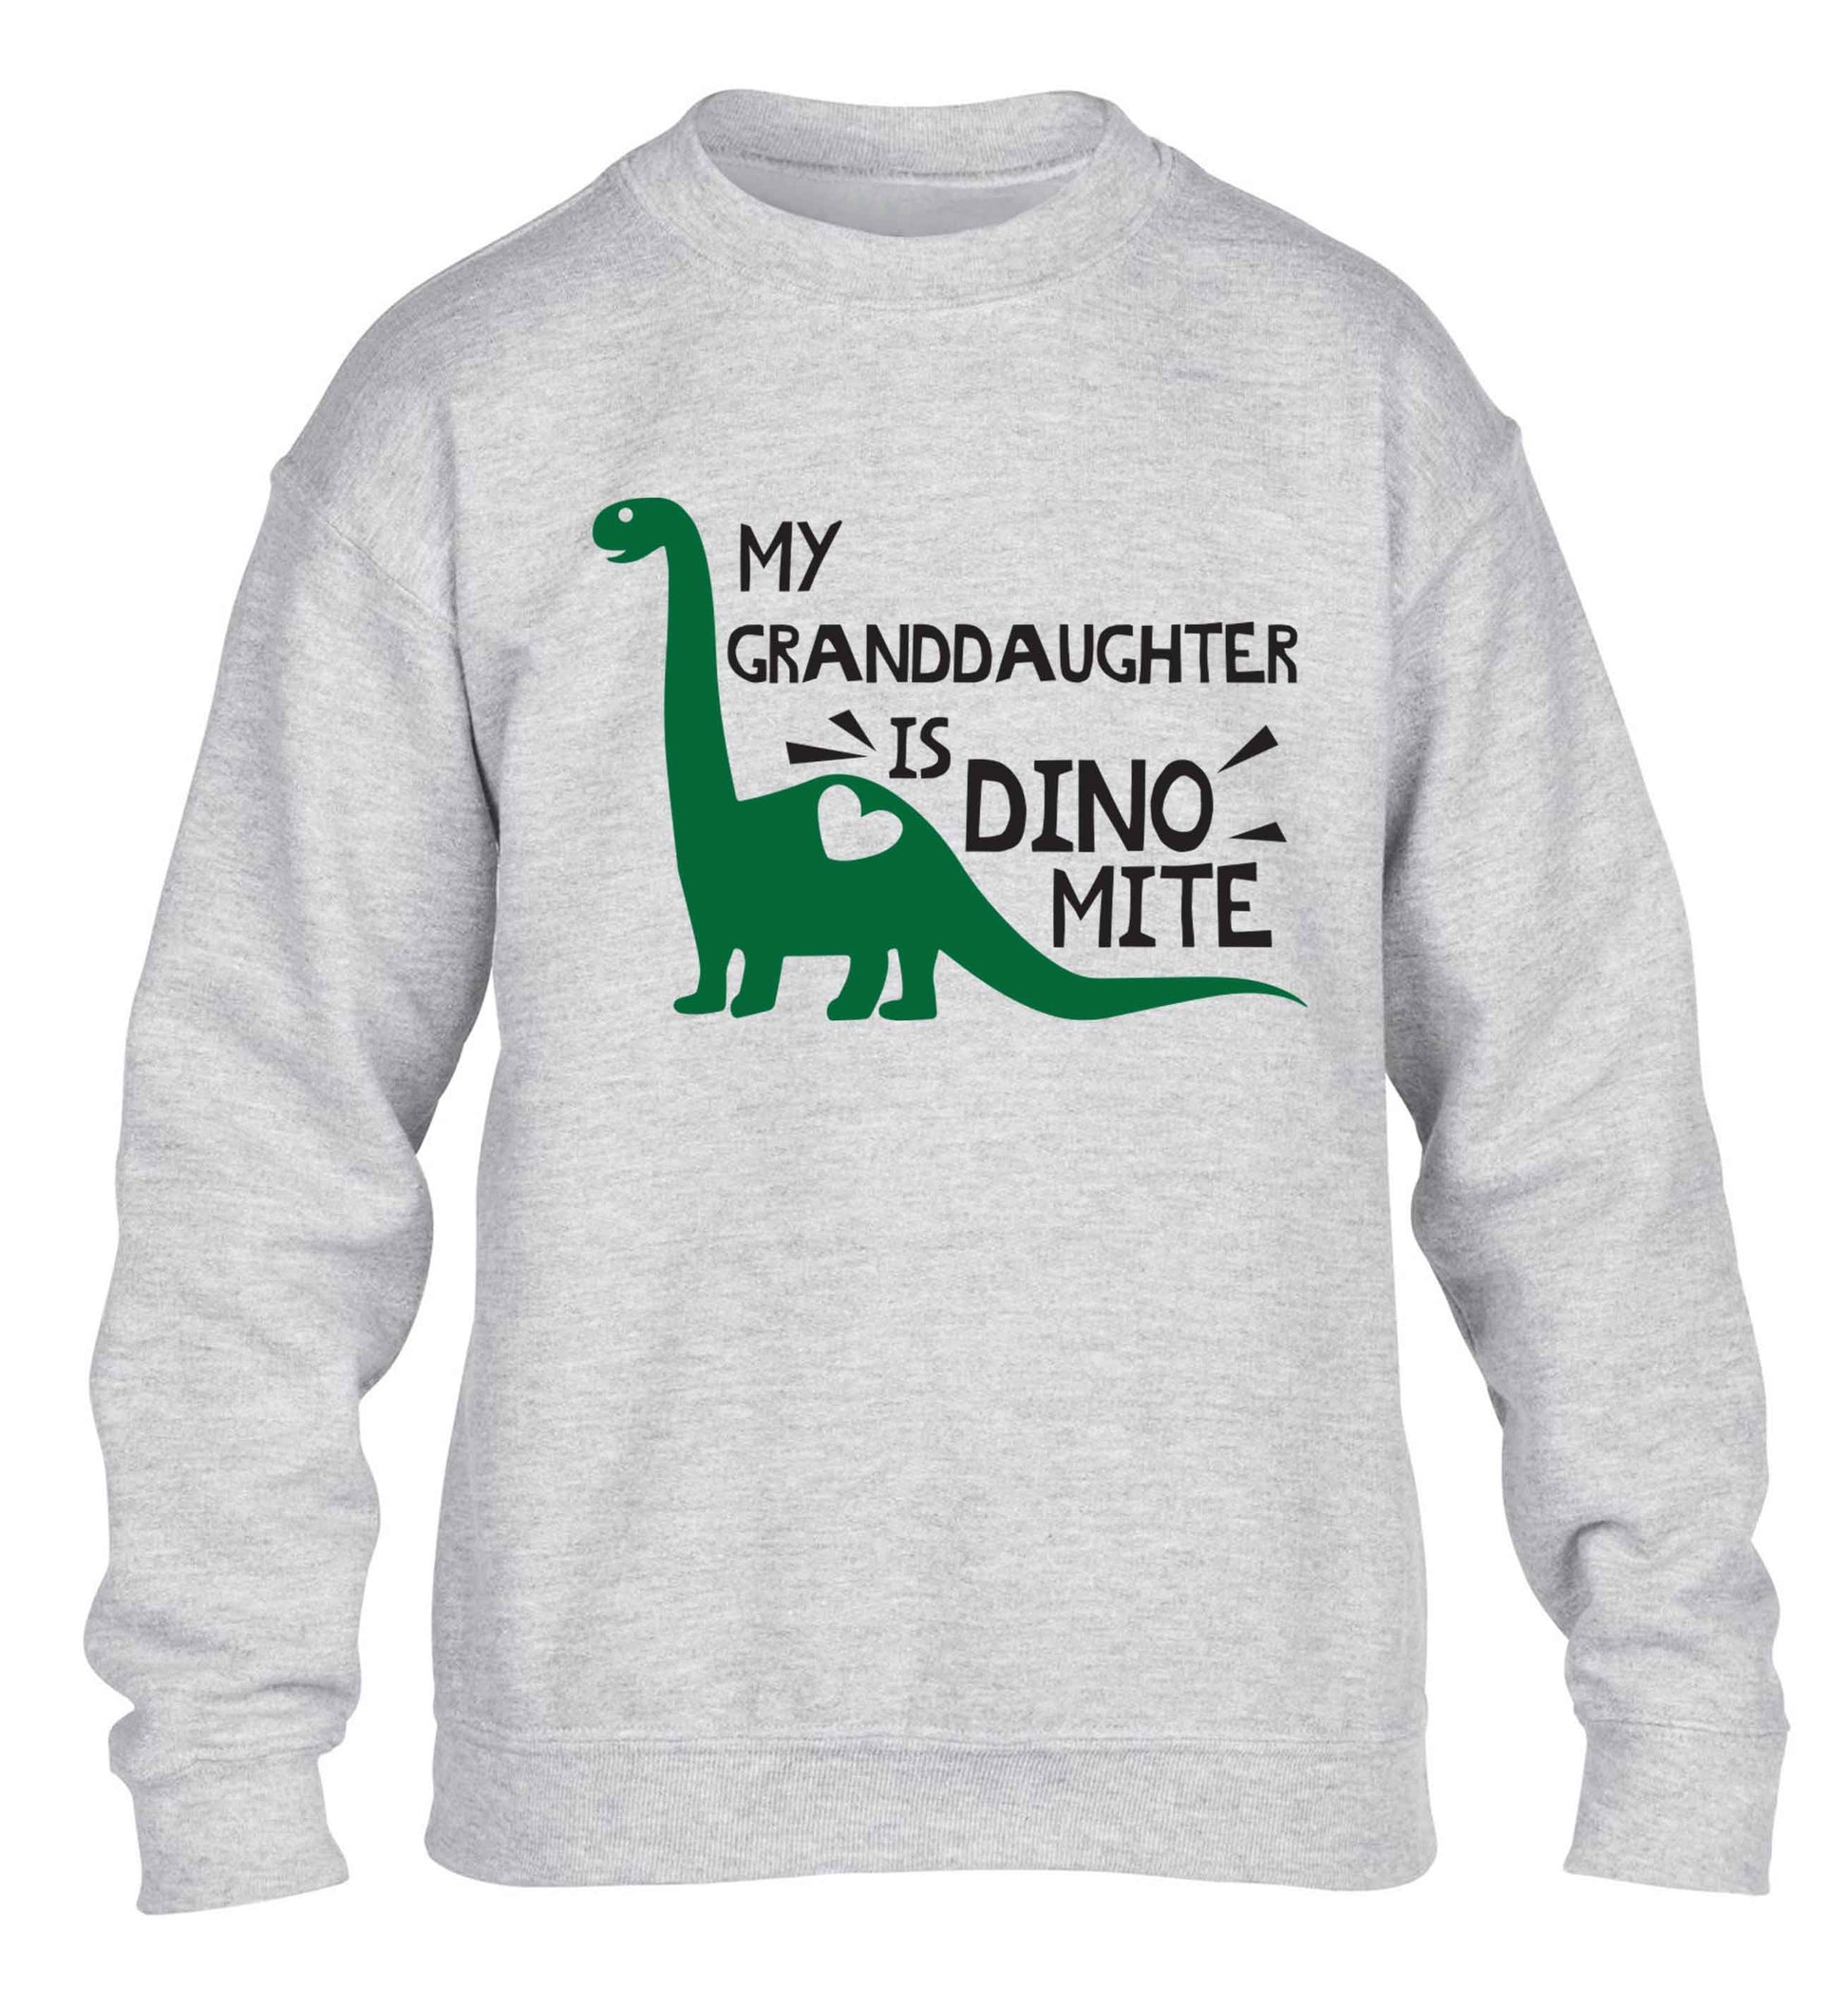 My granddaughter is dinomite! children's grey sweater 12-13 Years